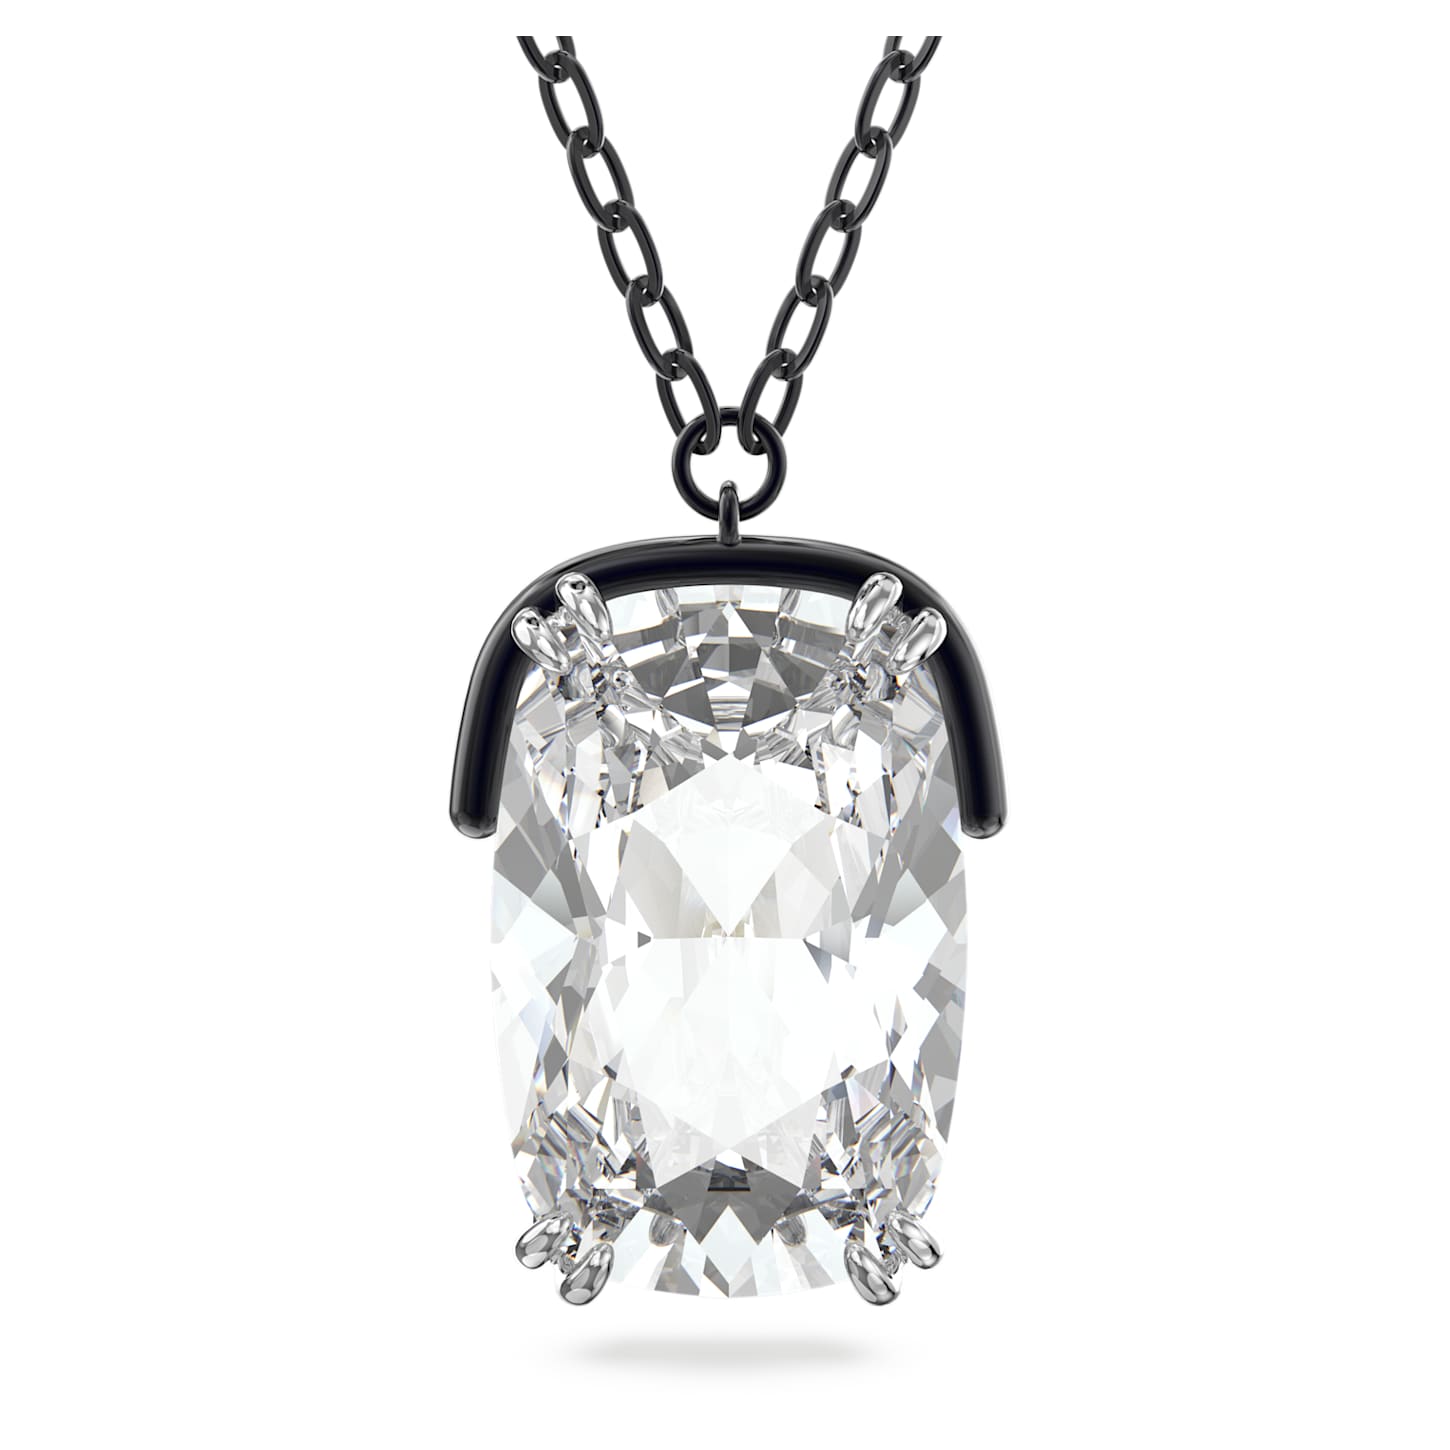 Harmonia pendant, Oversized crystals, White, Mixed metal finish